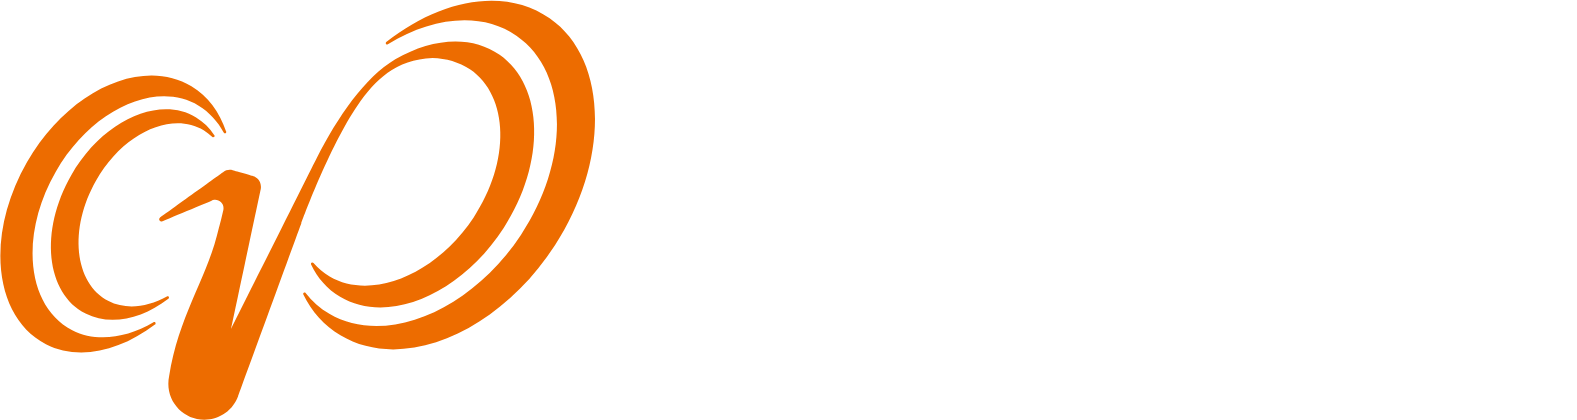 CGN Mining Company Logo groß für dunkle Hintergründe (transparentes PNG)